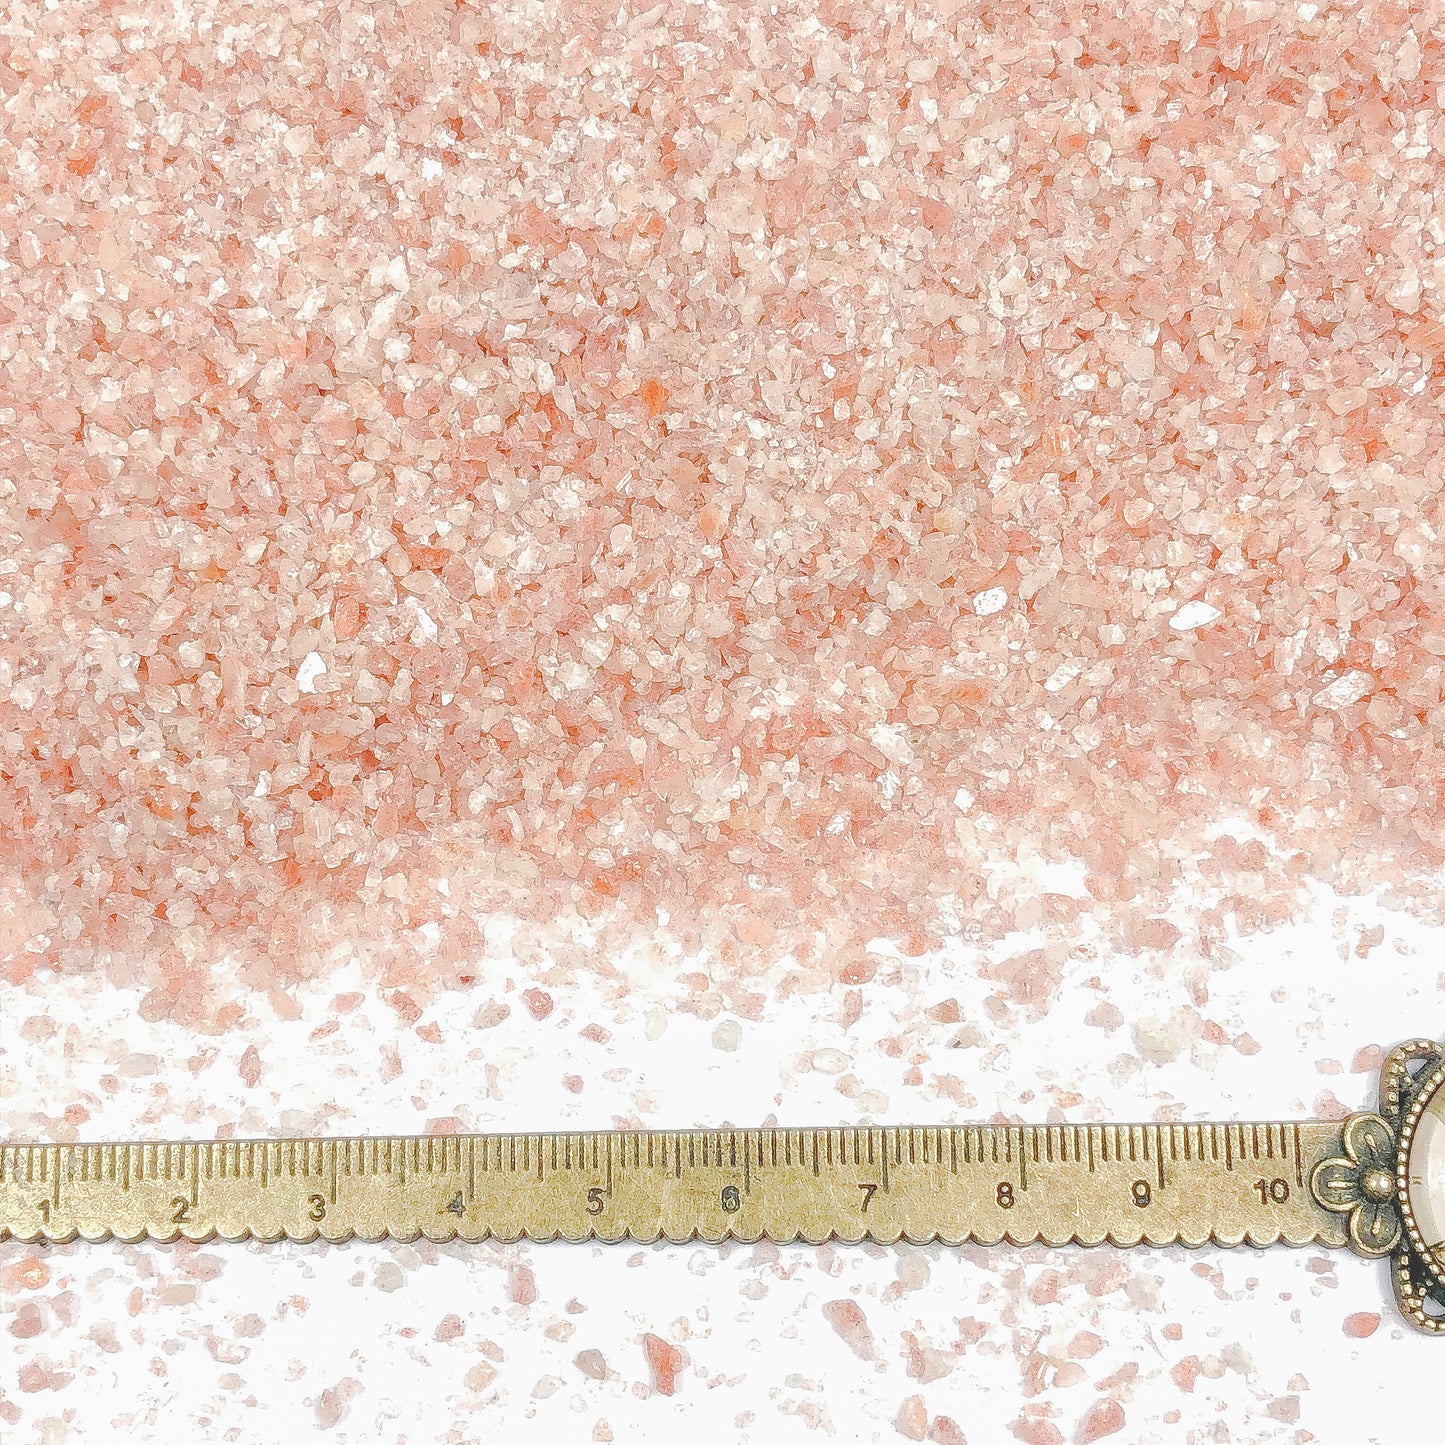 Crushed Peach Sunstone from India, Medium Crush, Sand Size, 2mm - 0.25mm